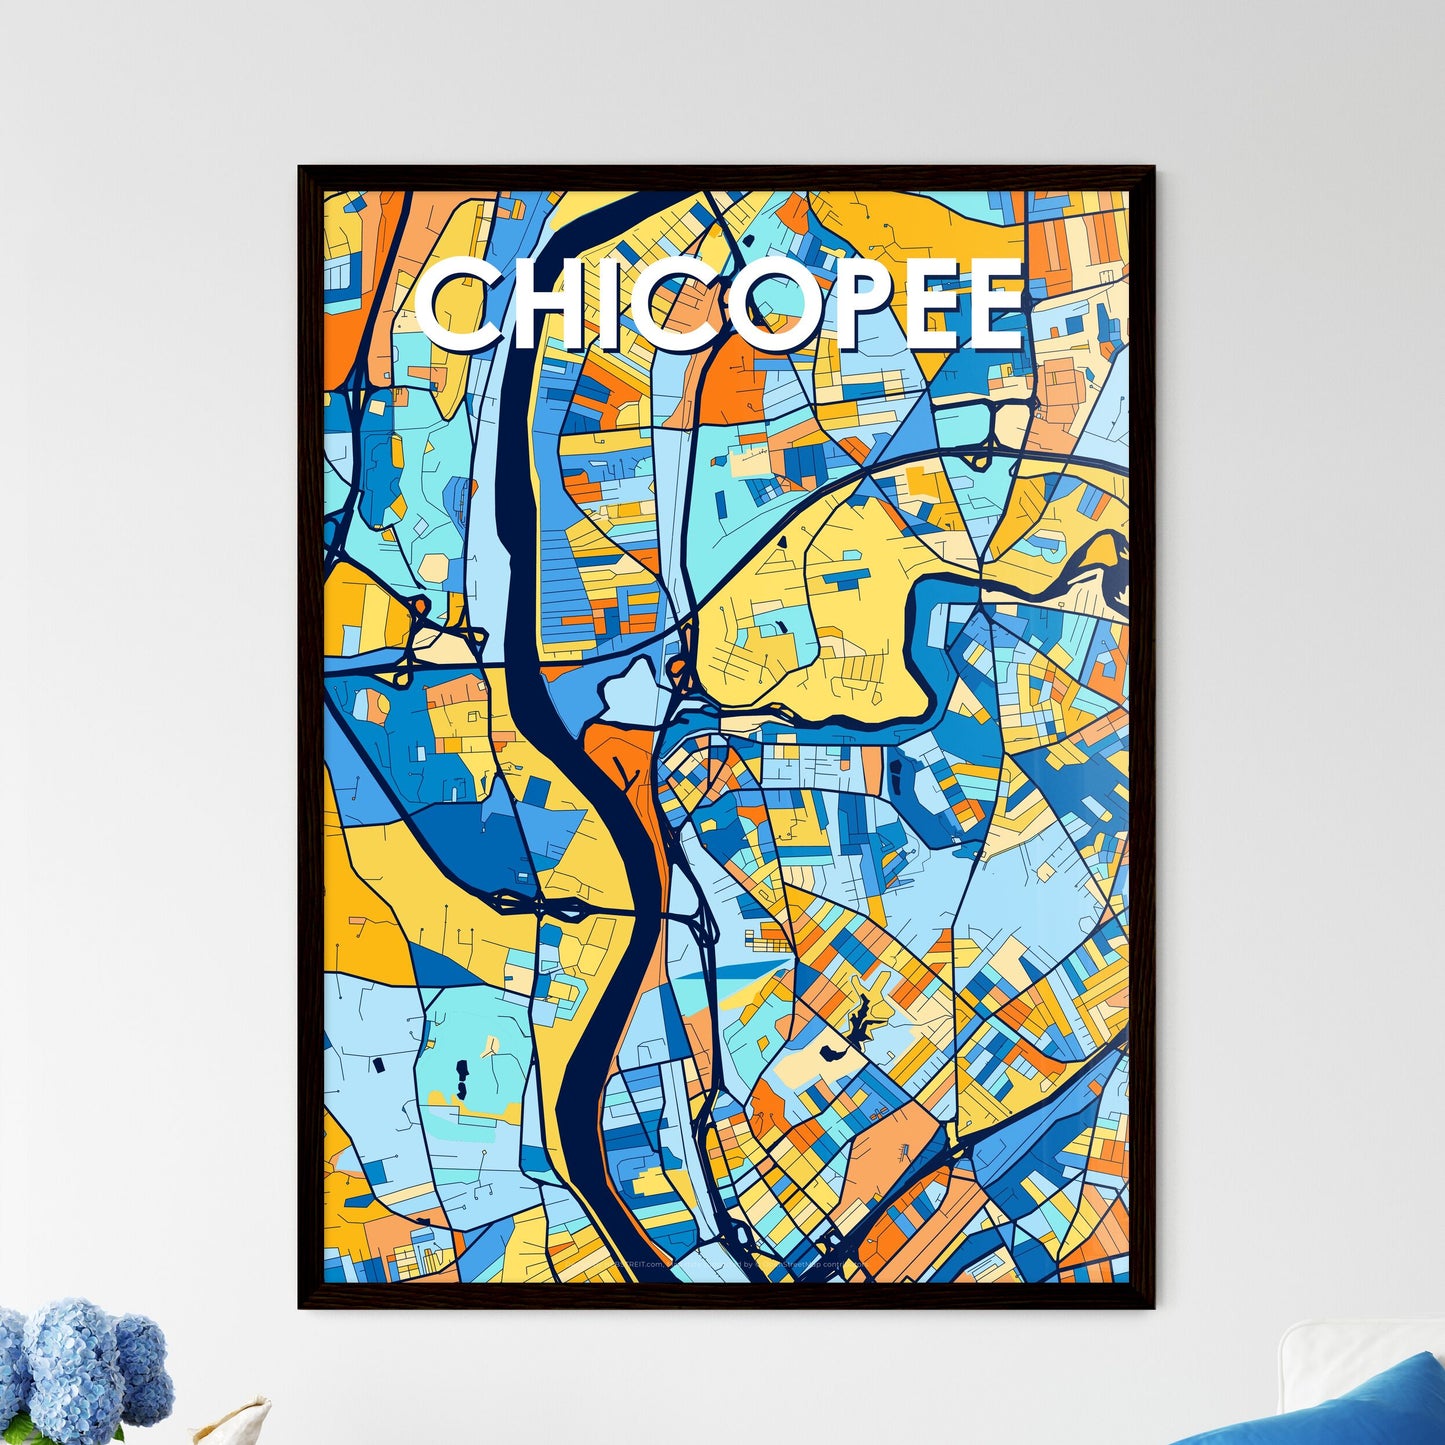 CHICOPEE MASSACHUSETTS Vibrant Colorful Art Map Poster Blue Orange